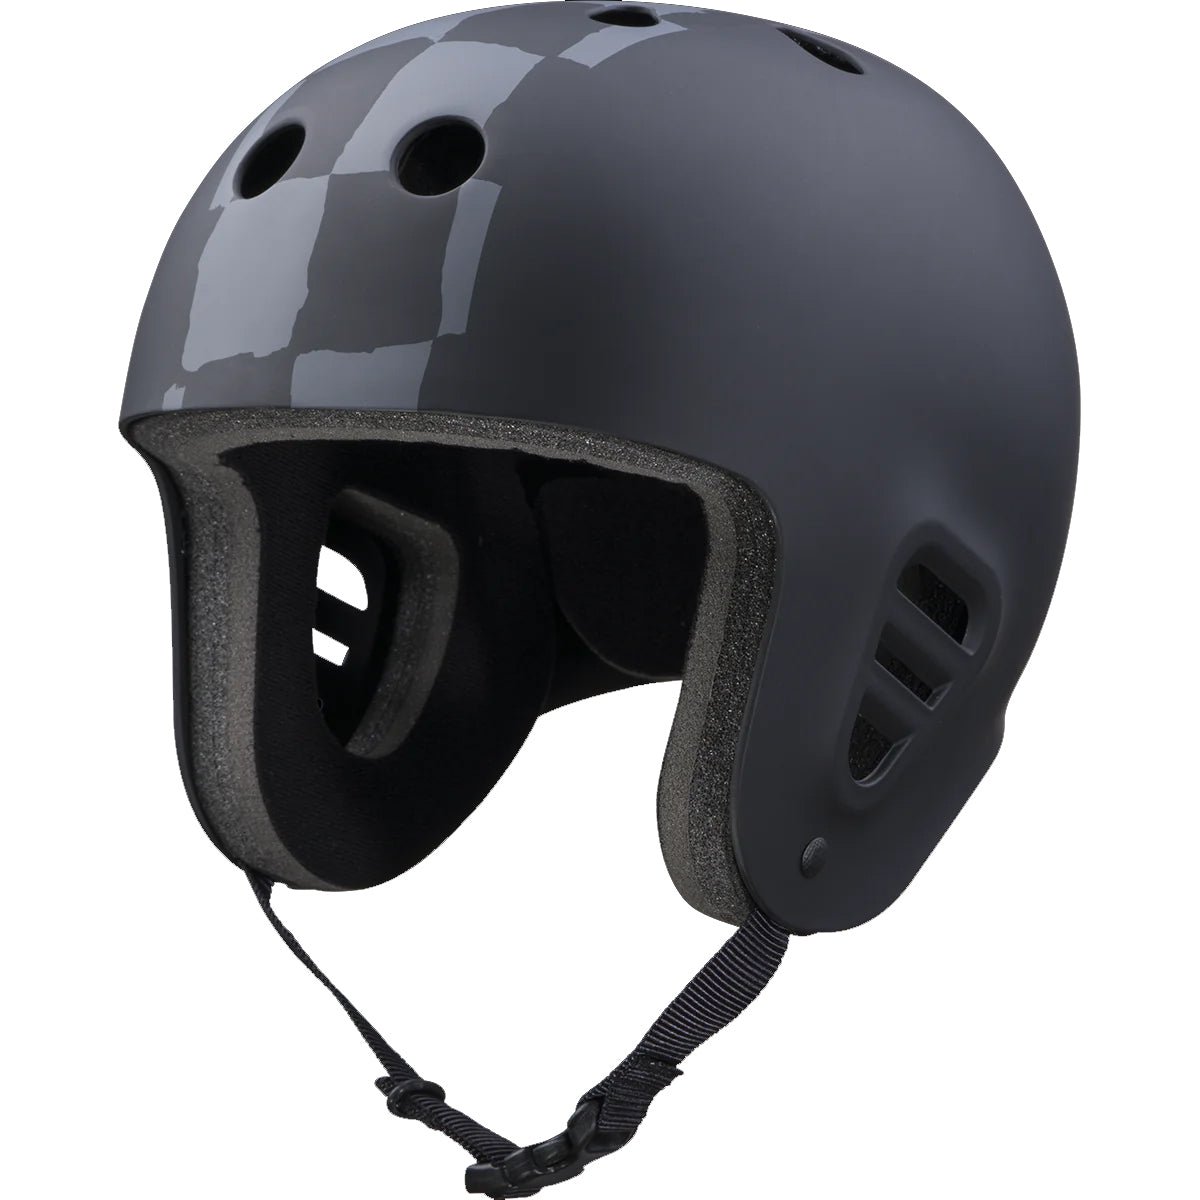 Protec Full Cut Gonzo Checkers Skate Helmet